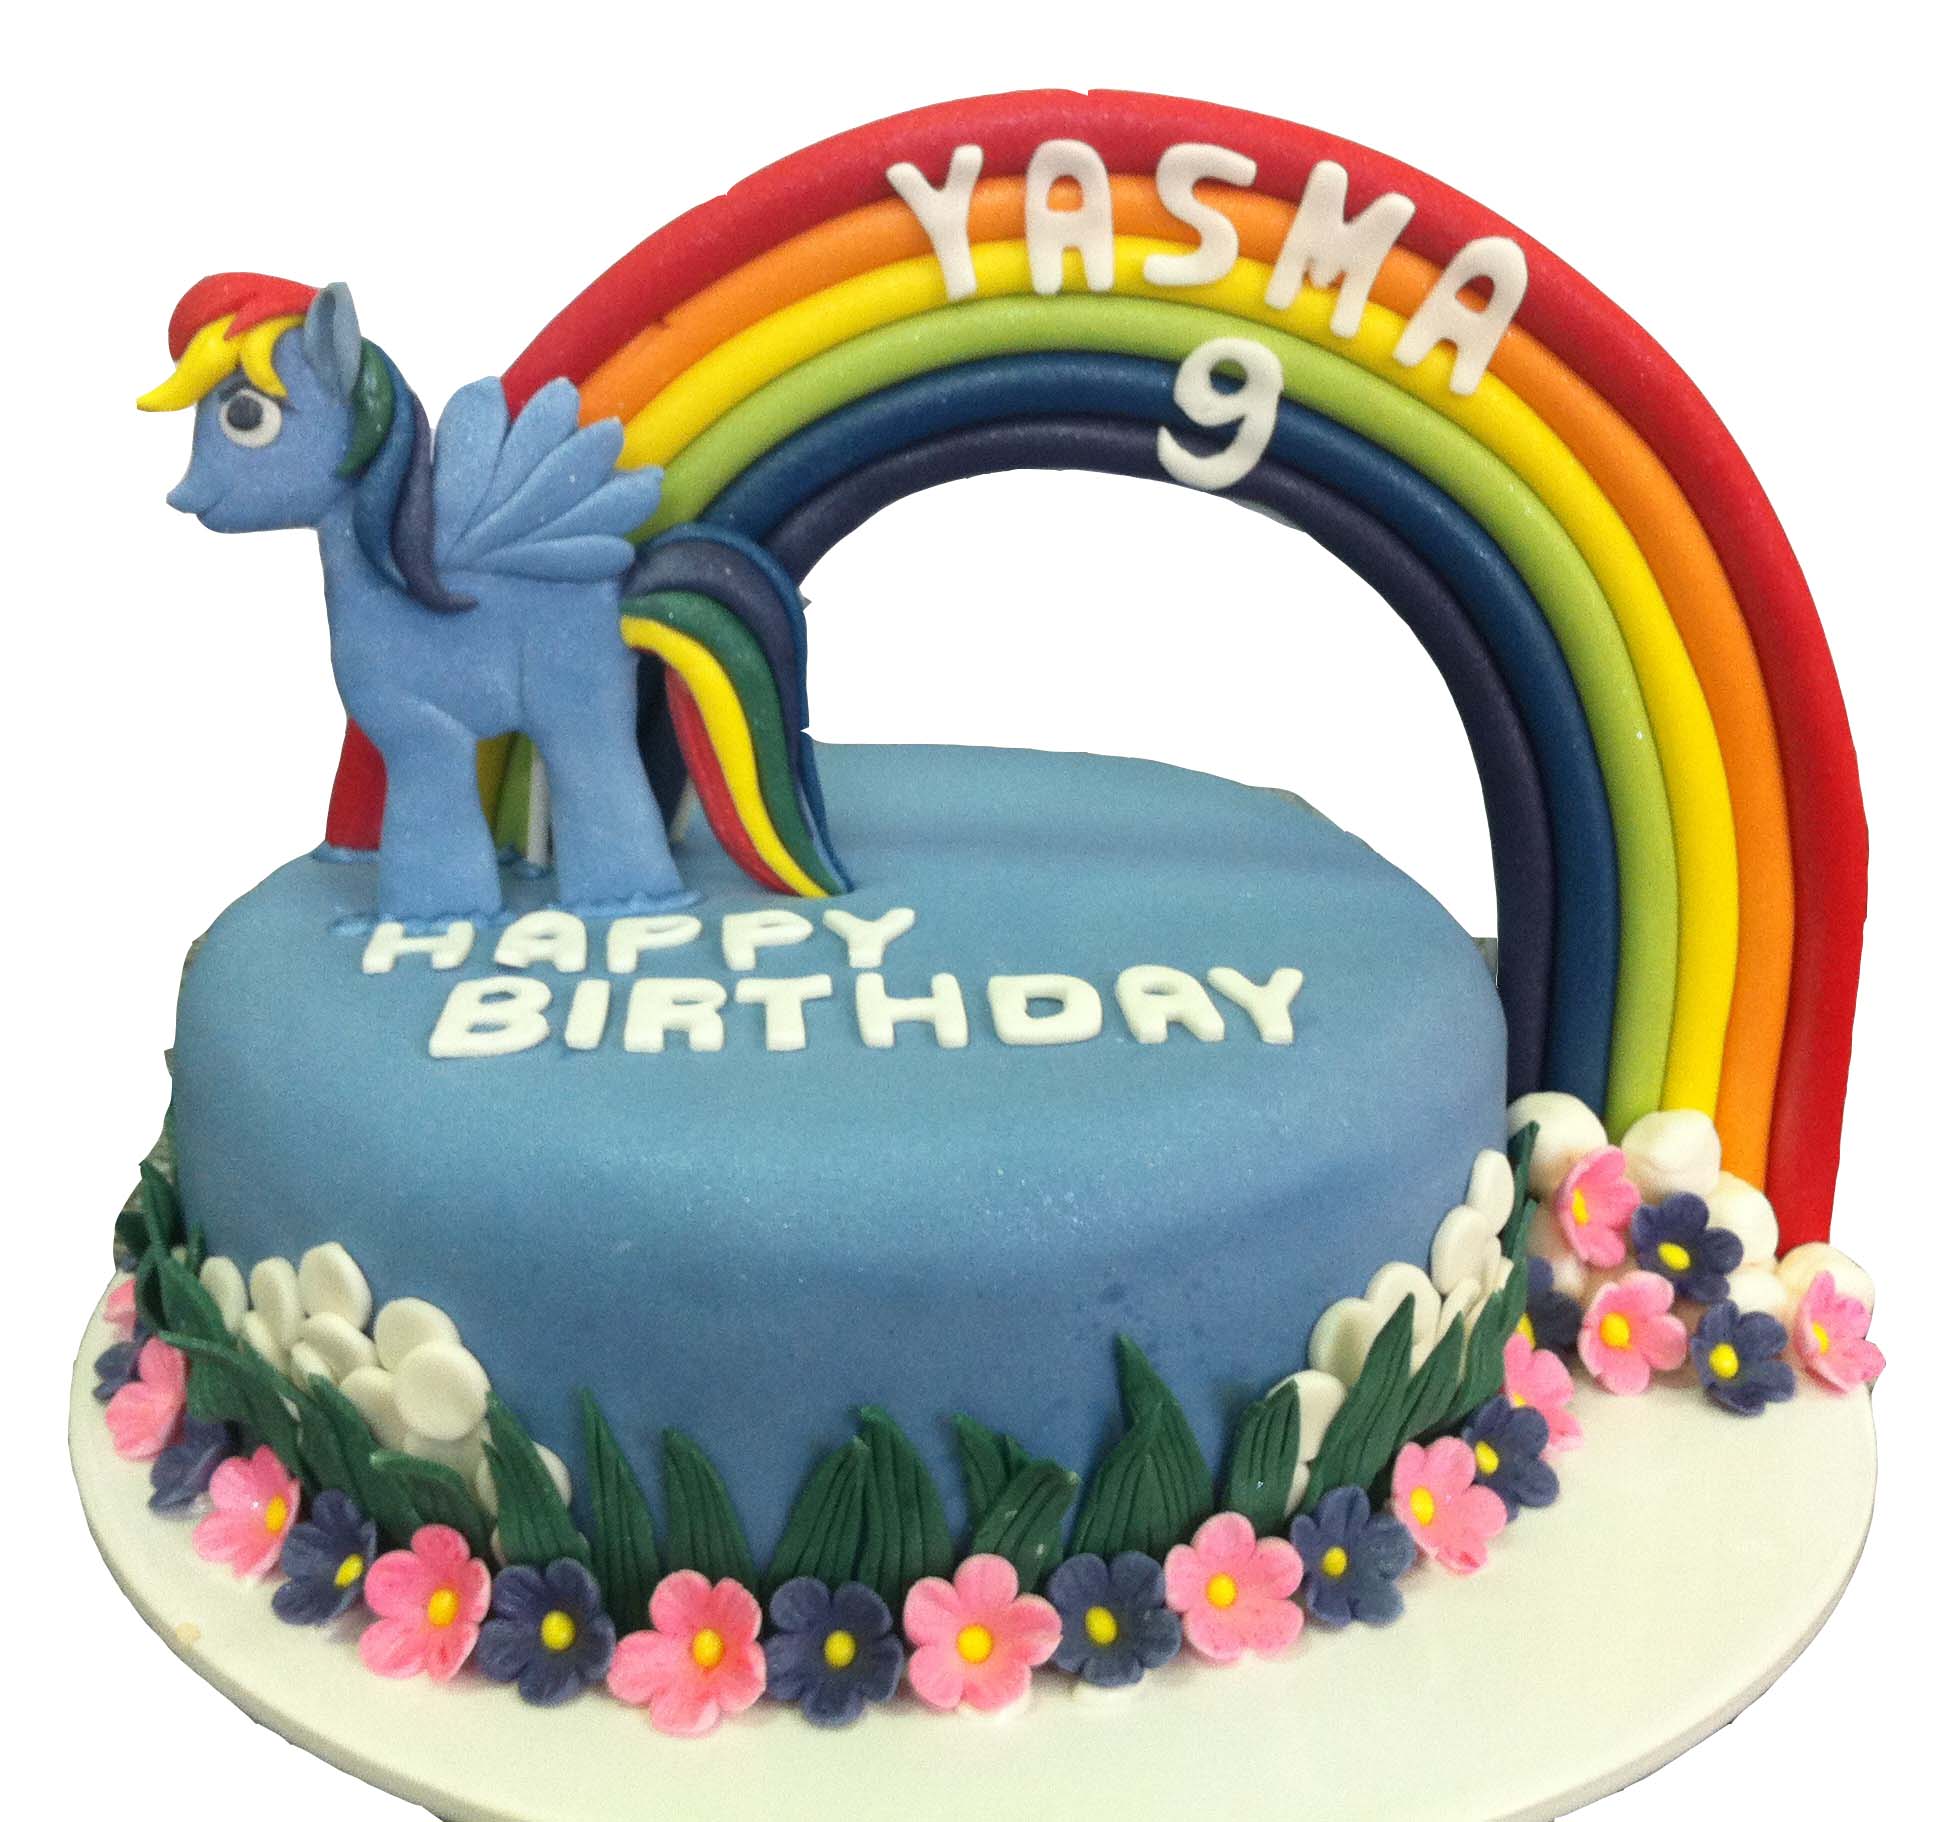 Birthday Designer Cake by Yalu Yalu 1Kg/1.5Kg yaluyalu